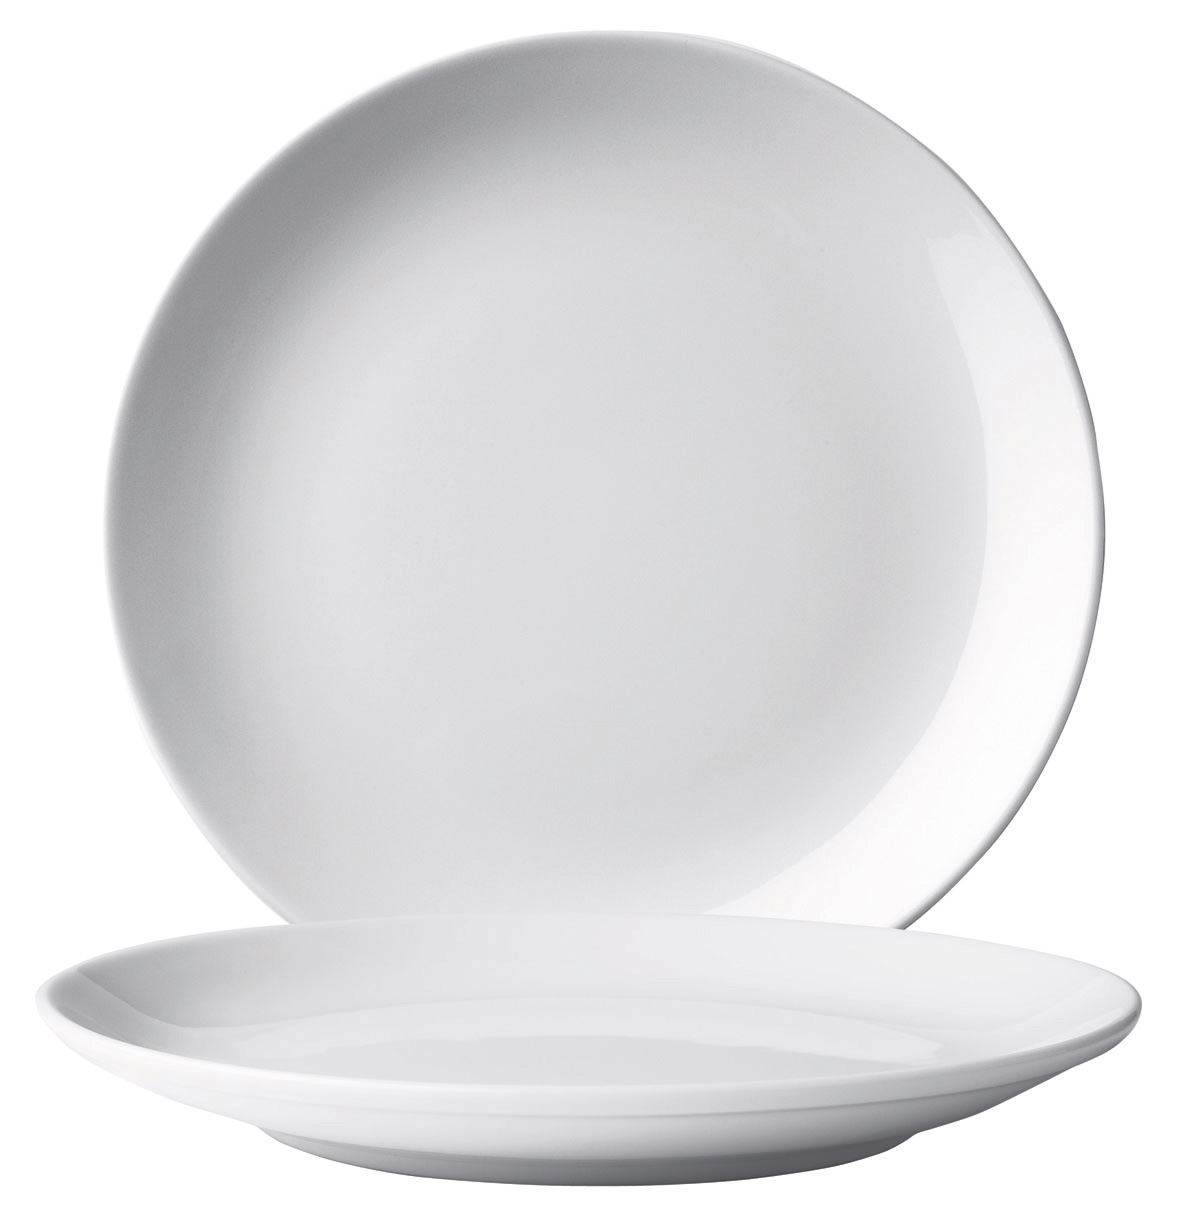 Assiette plate ronde Eo porcelaine blanc 17 cm In Situ - 050167